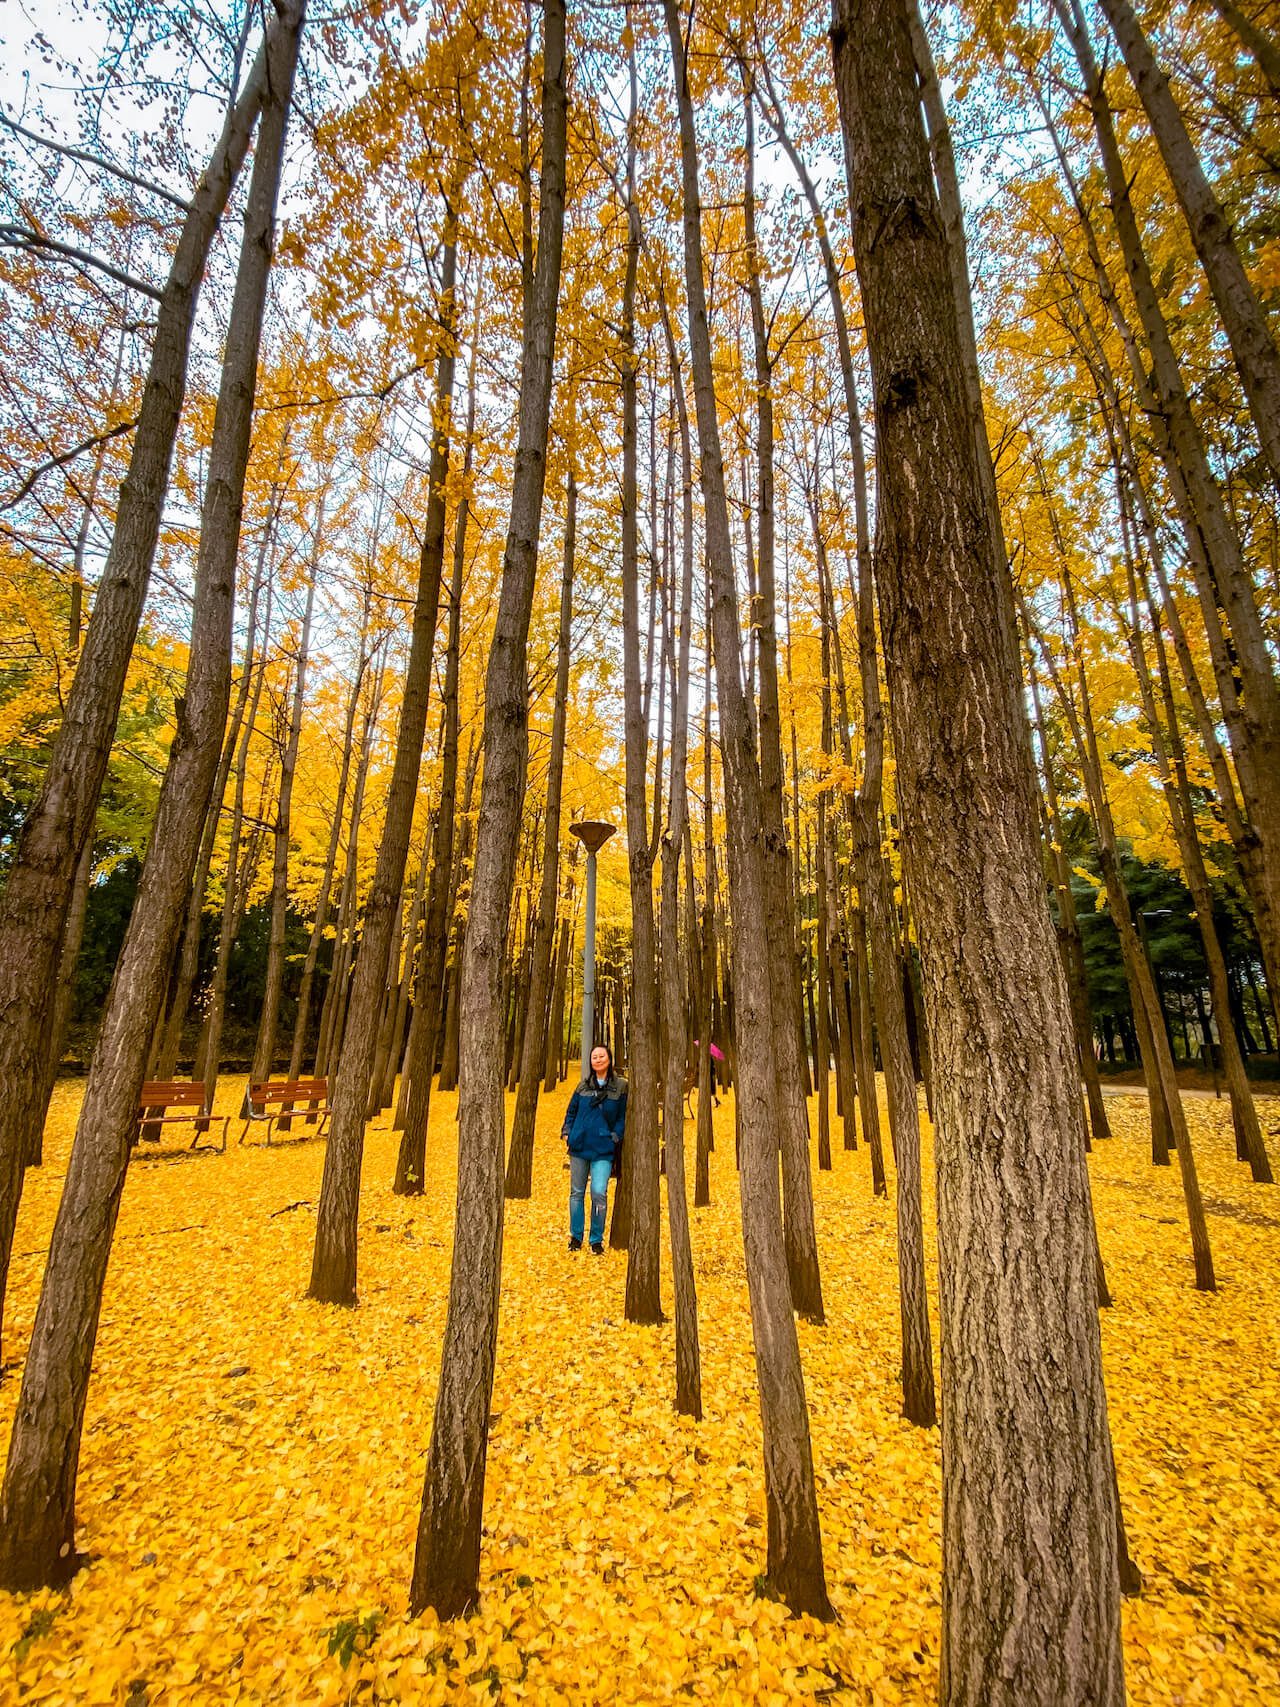 korea in november | seoul forest ginkgo trees